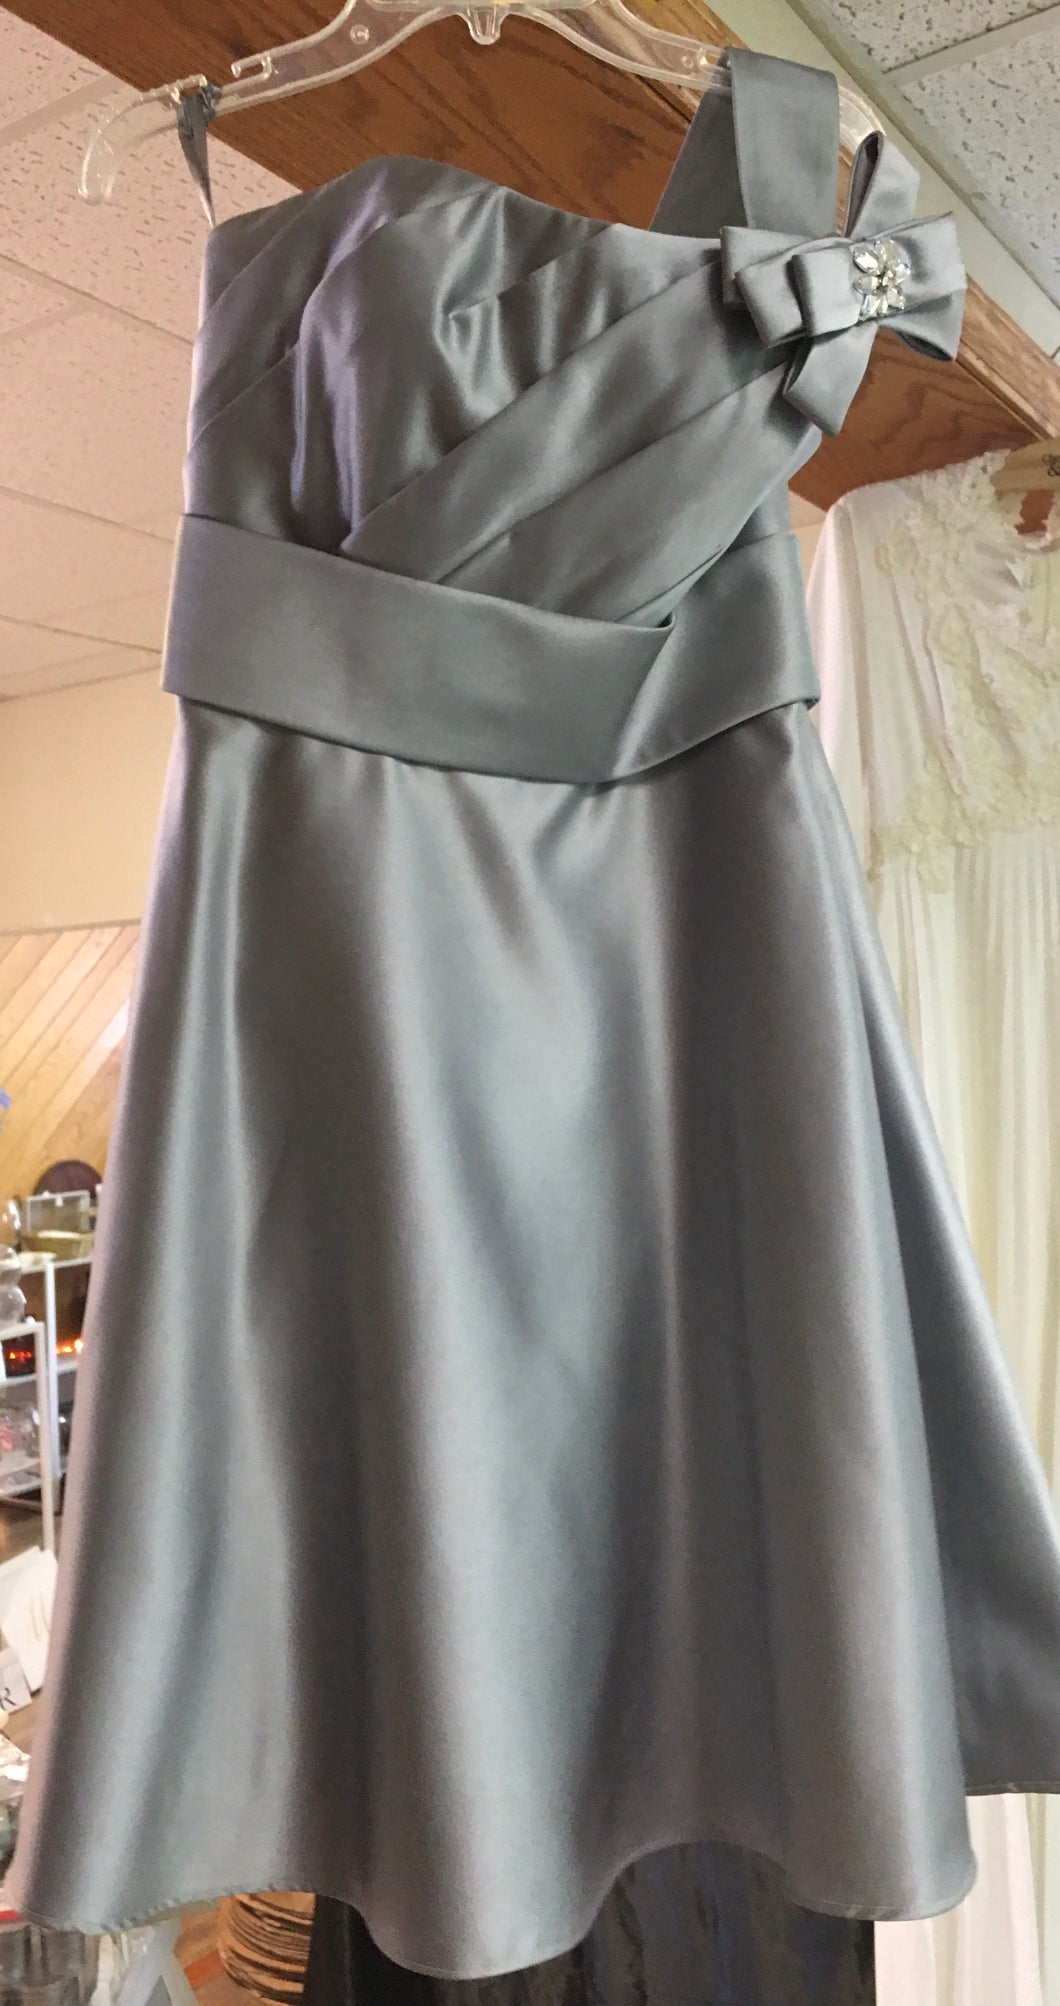 MEDL100-D. Allure Bridals Silver One Shoulder Gown, Size 4